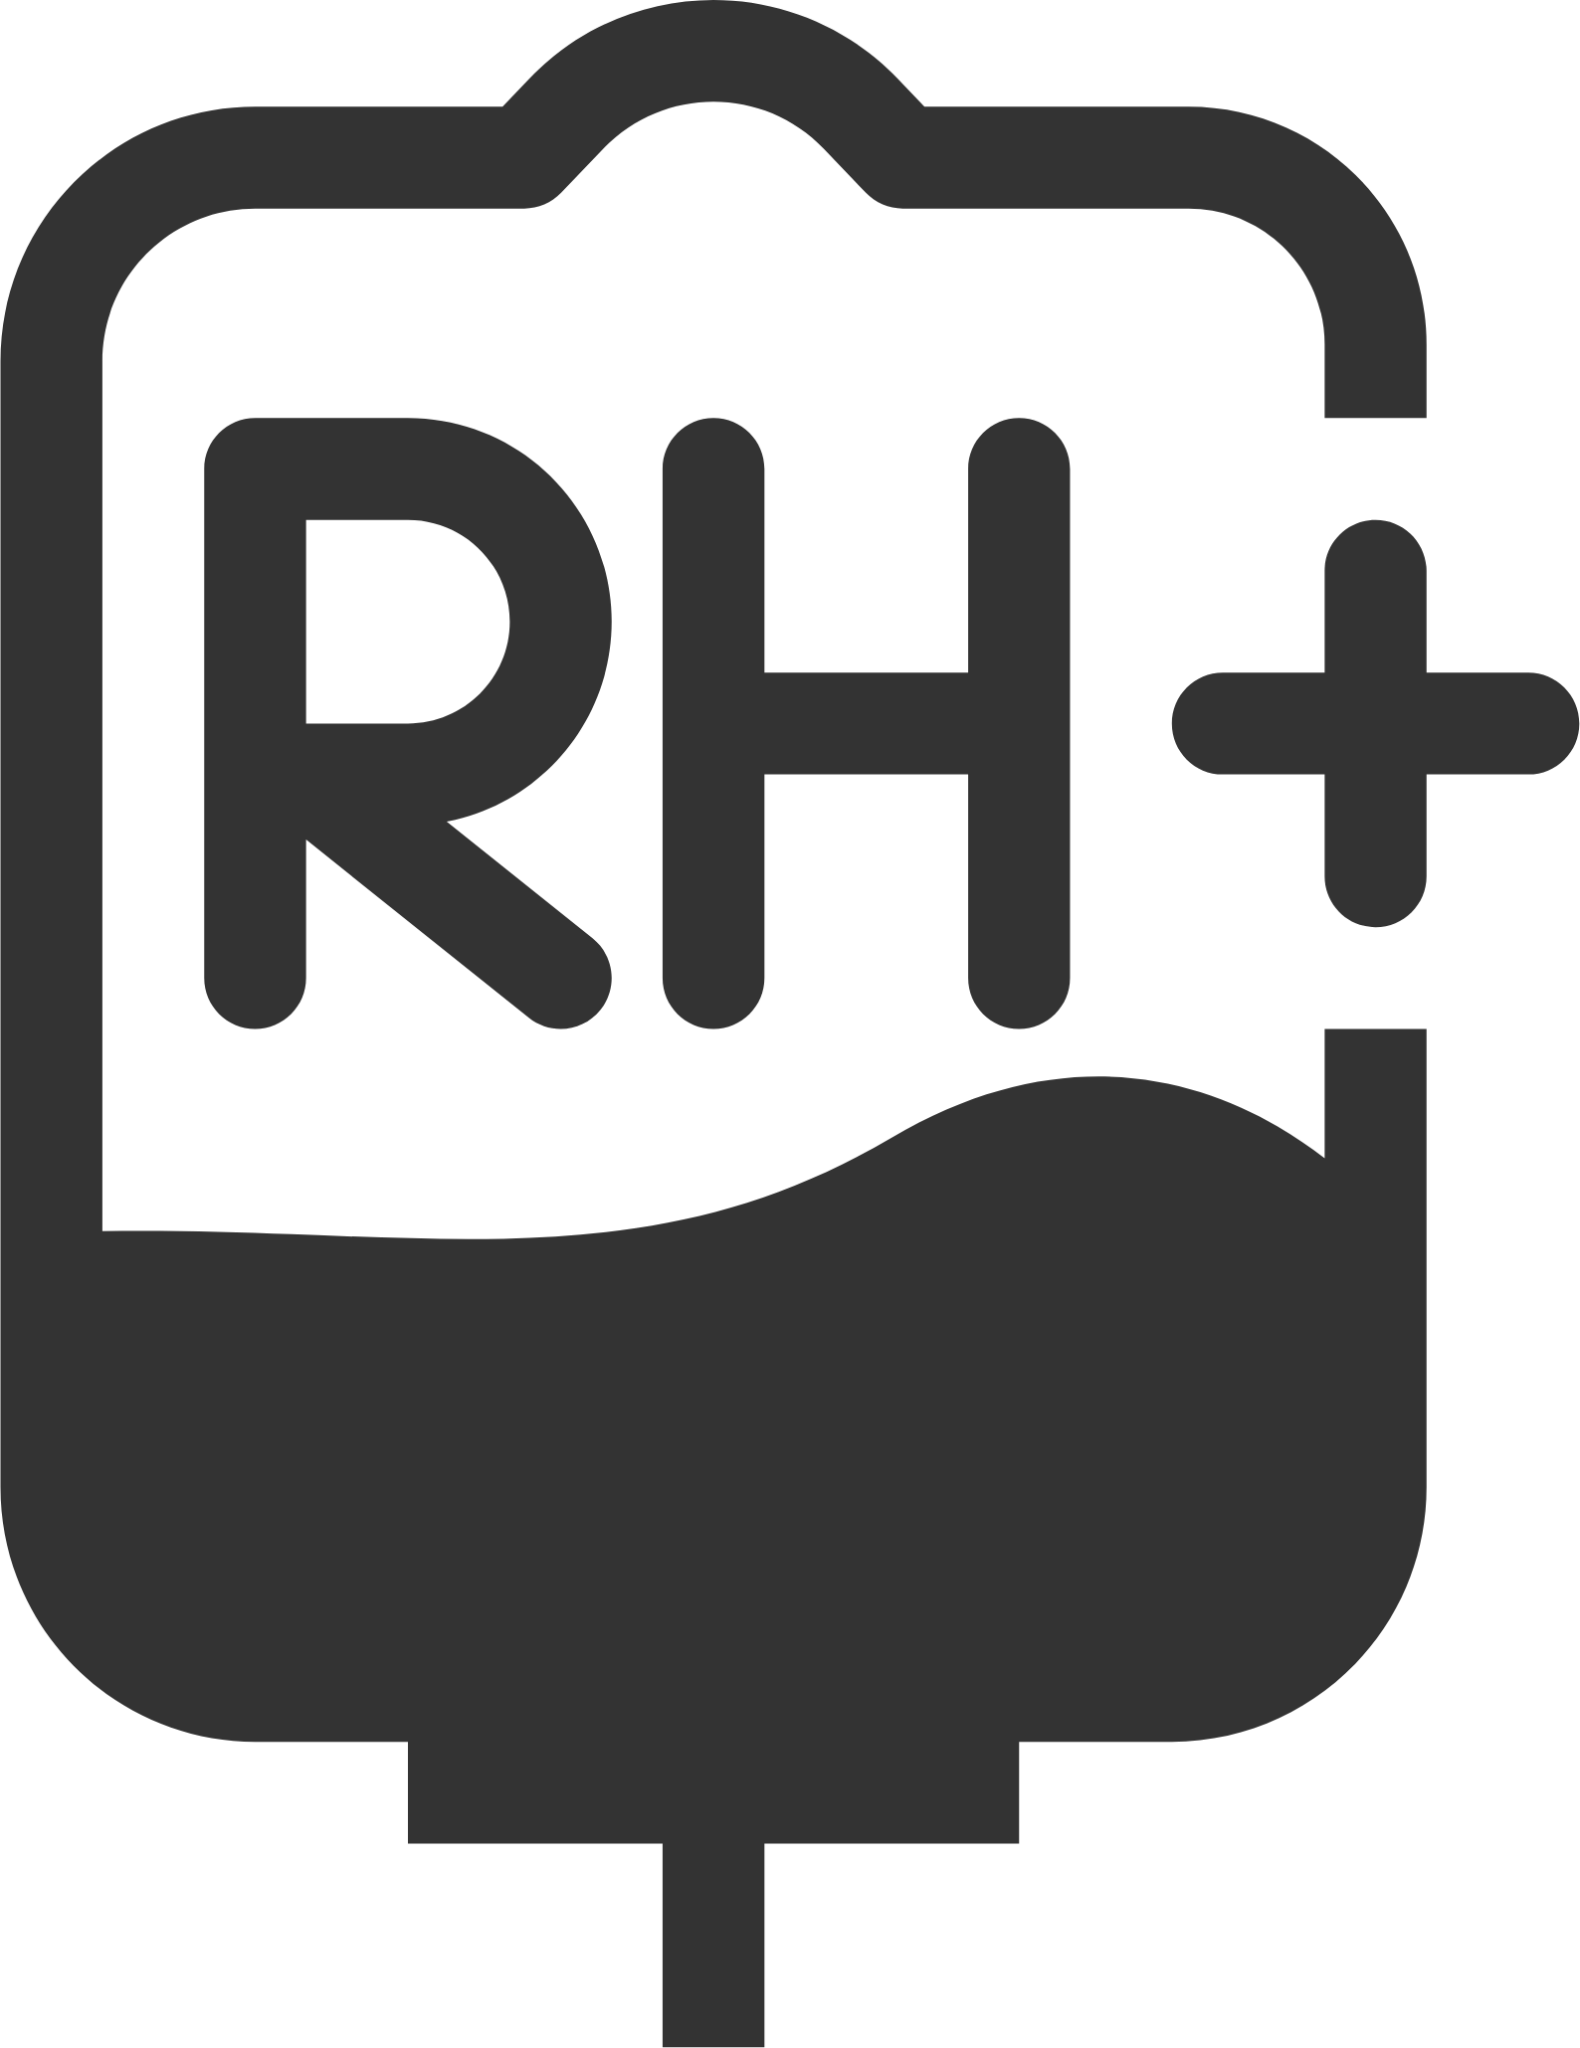 Blood Type RH+ icon